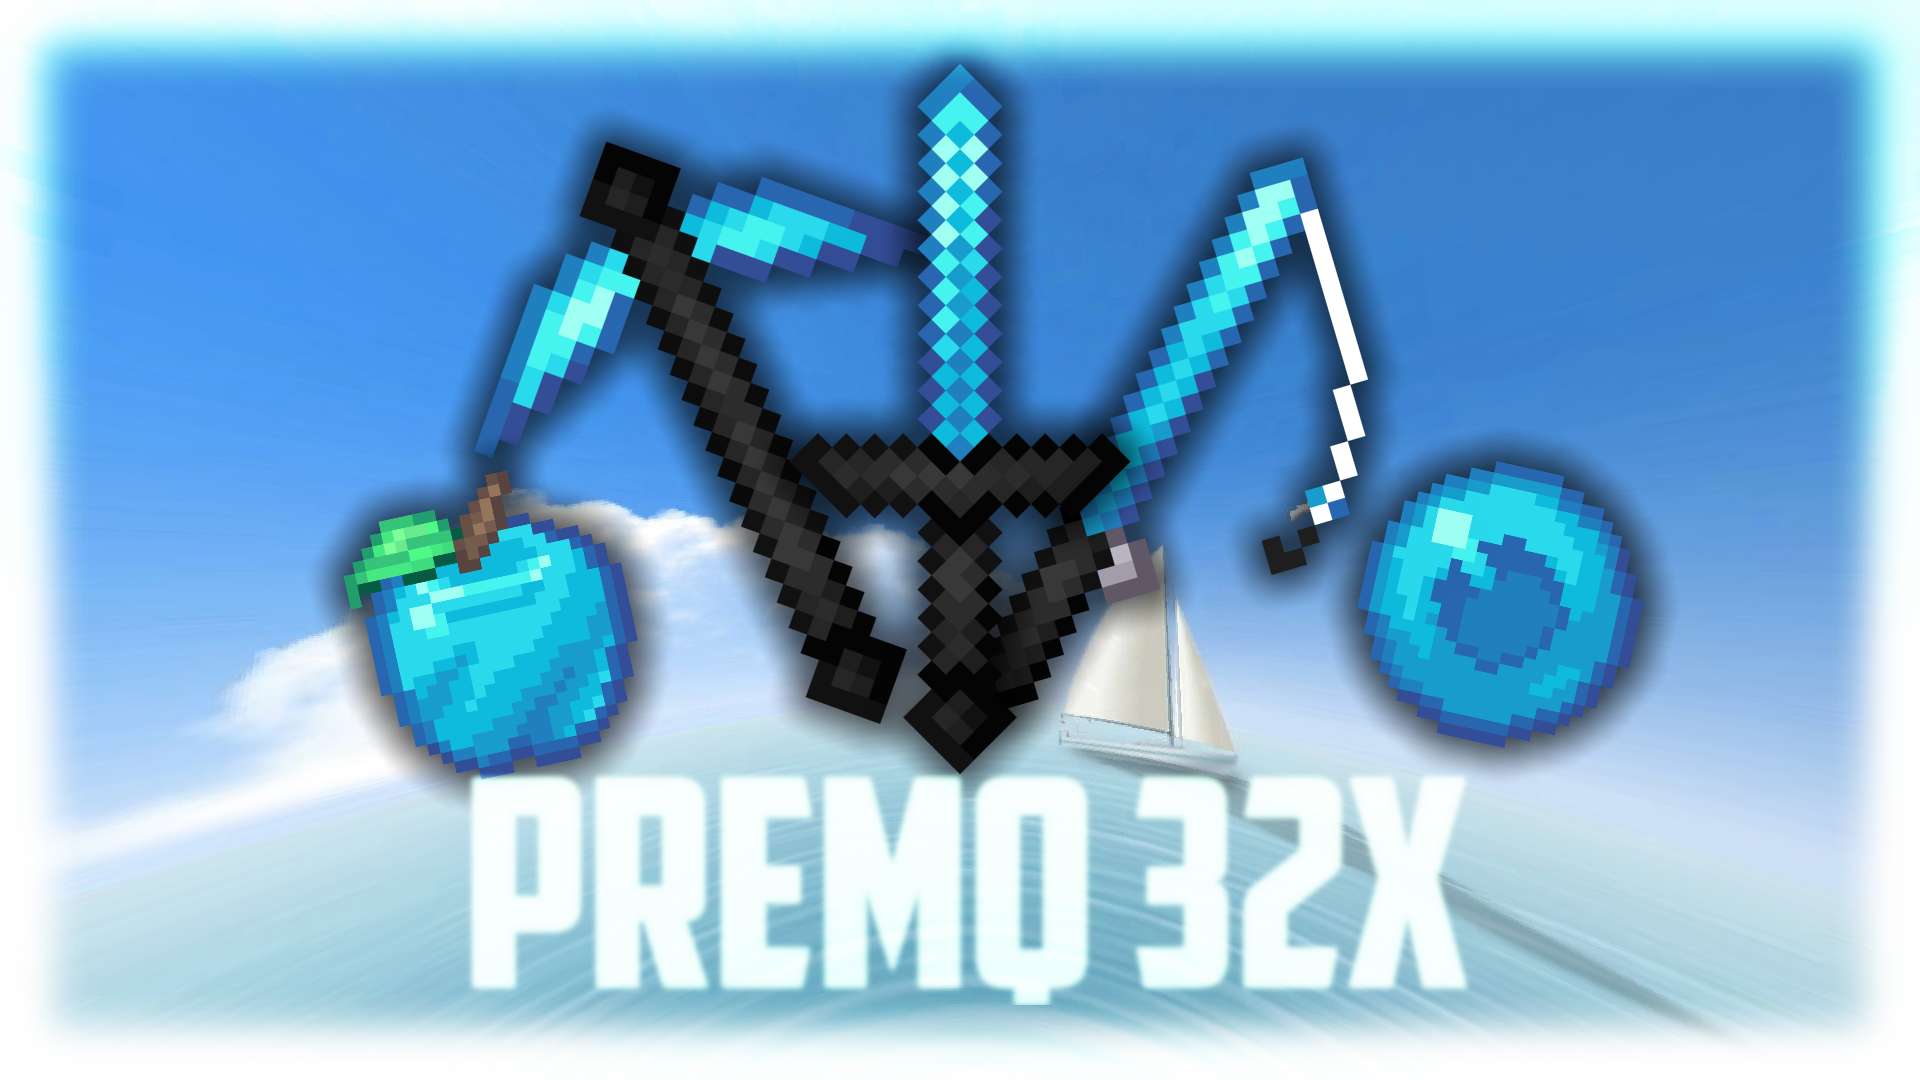 Premq Revamp 32 by Zlax on PvPRP